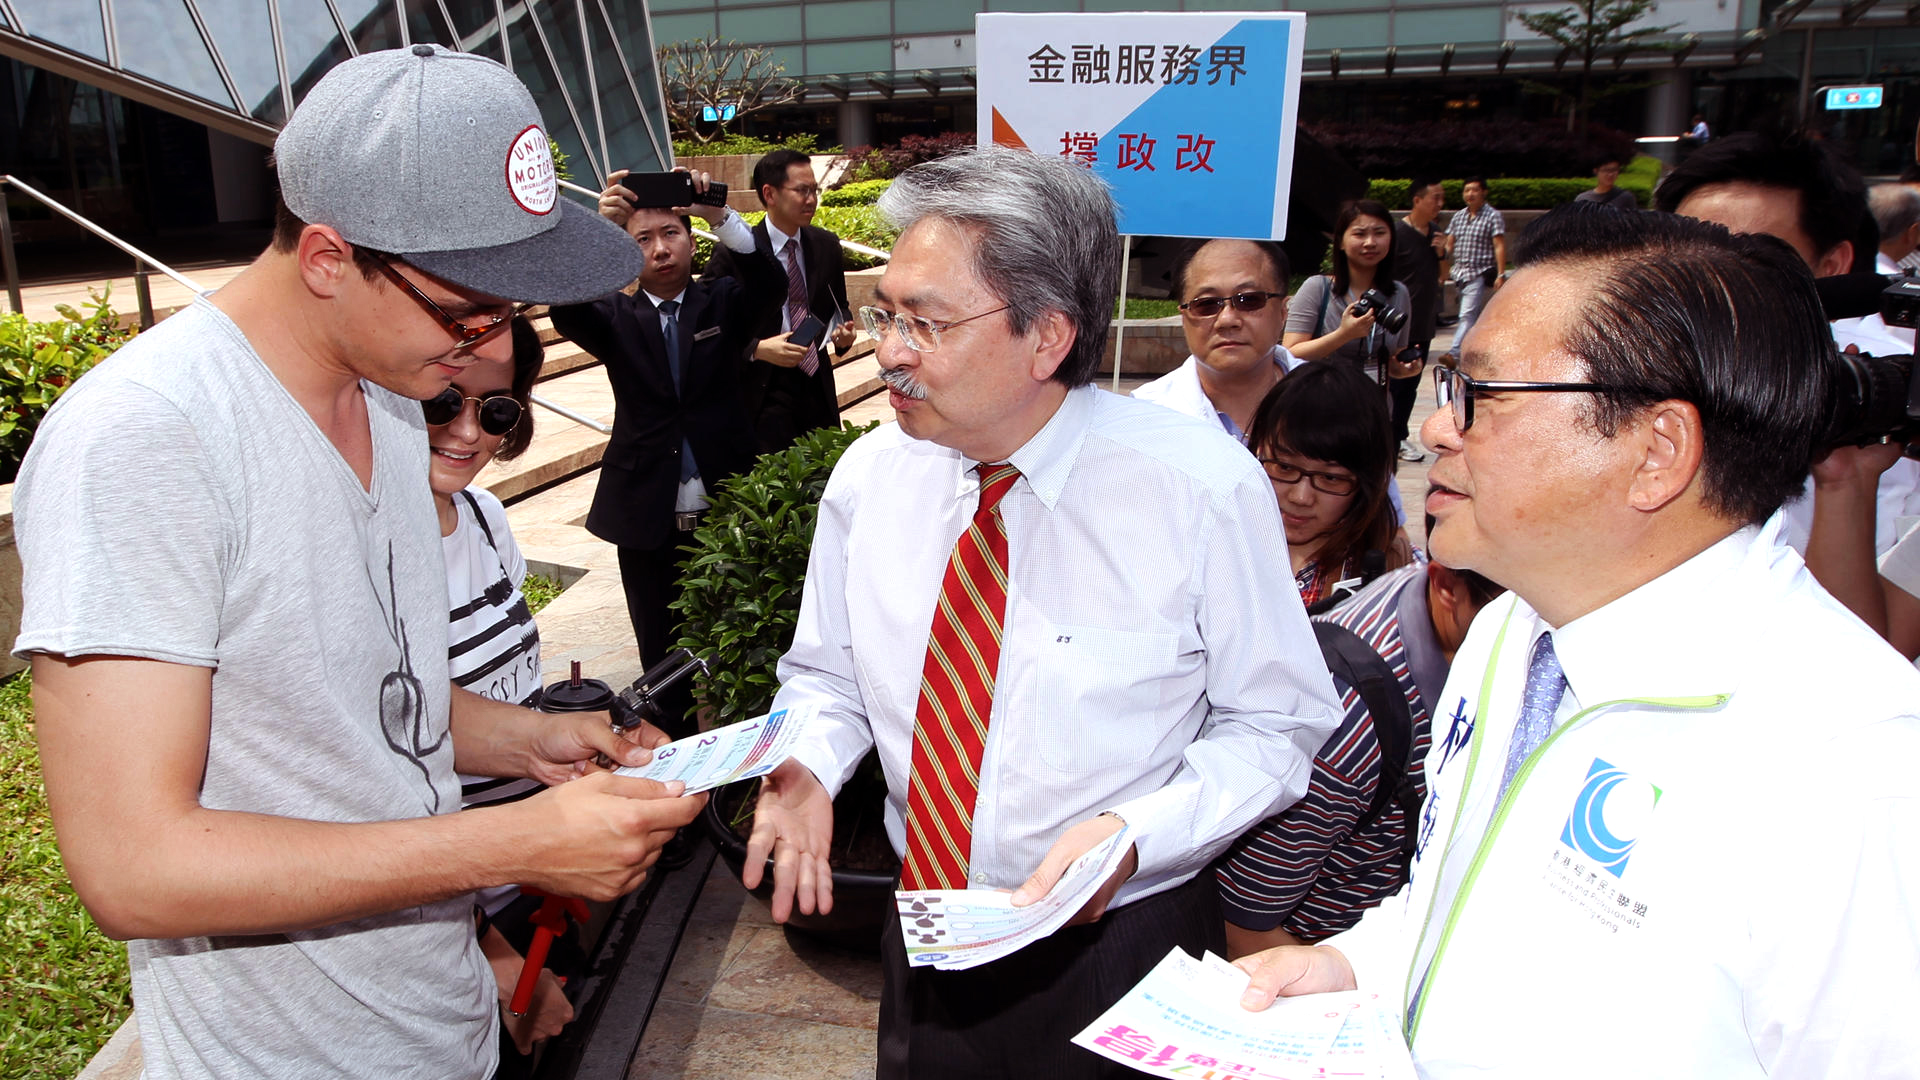 John Tsang insists the promotion drive will continue. Photo: Franke Tsang